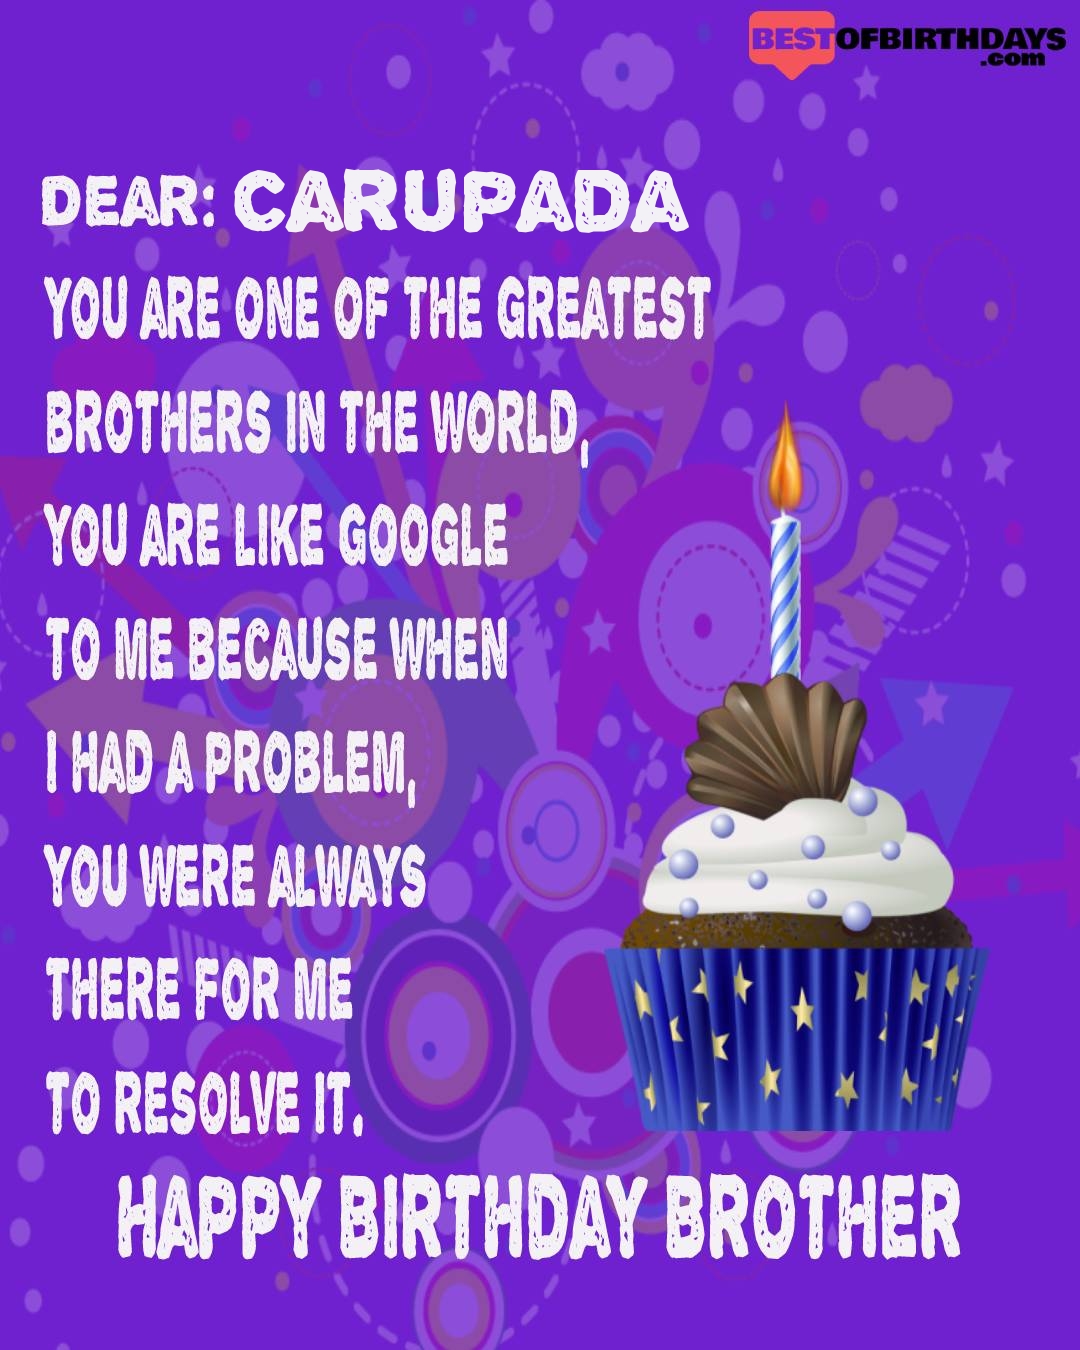 Happy birthday carupada bhai brother bro